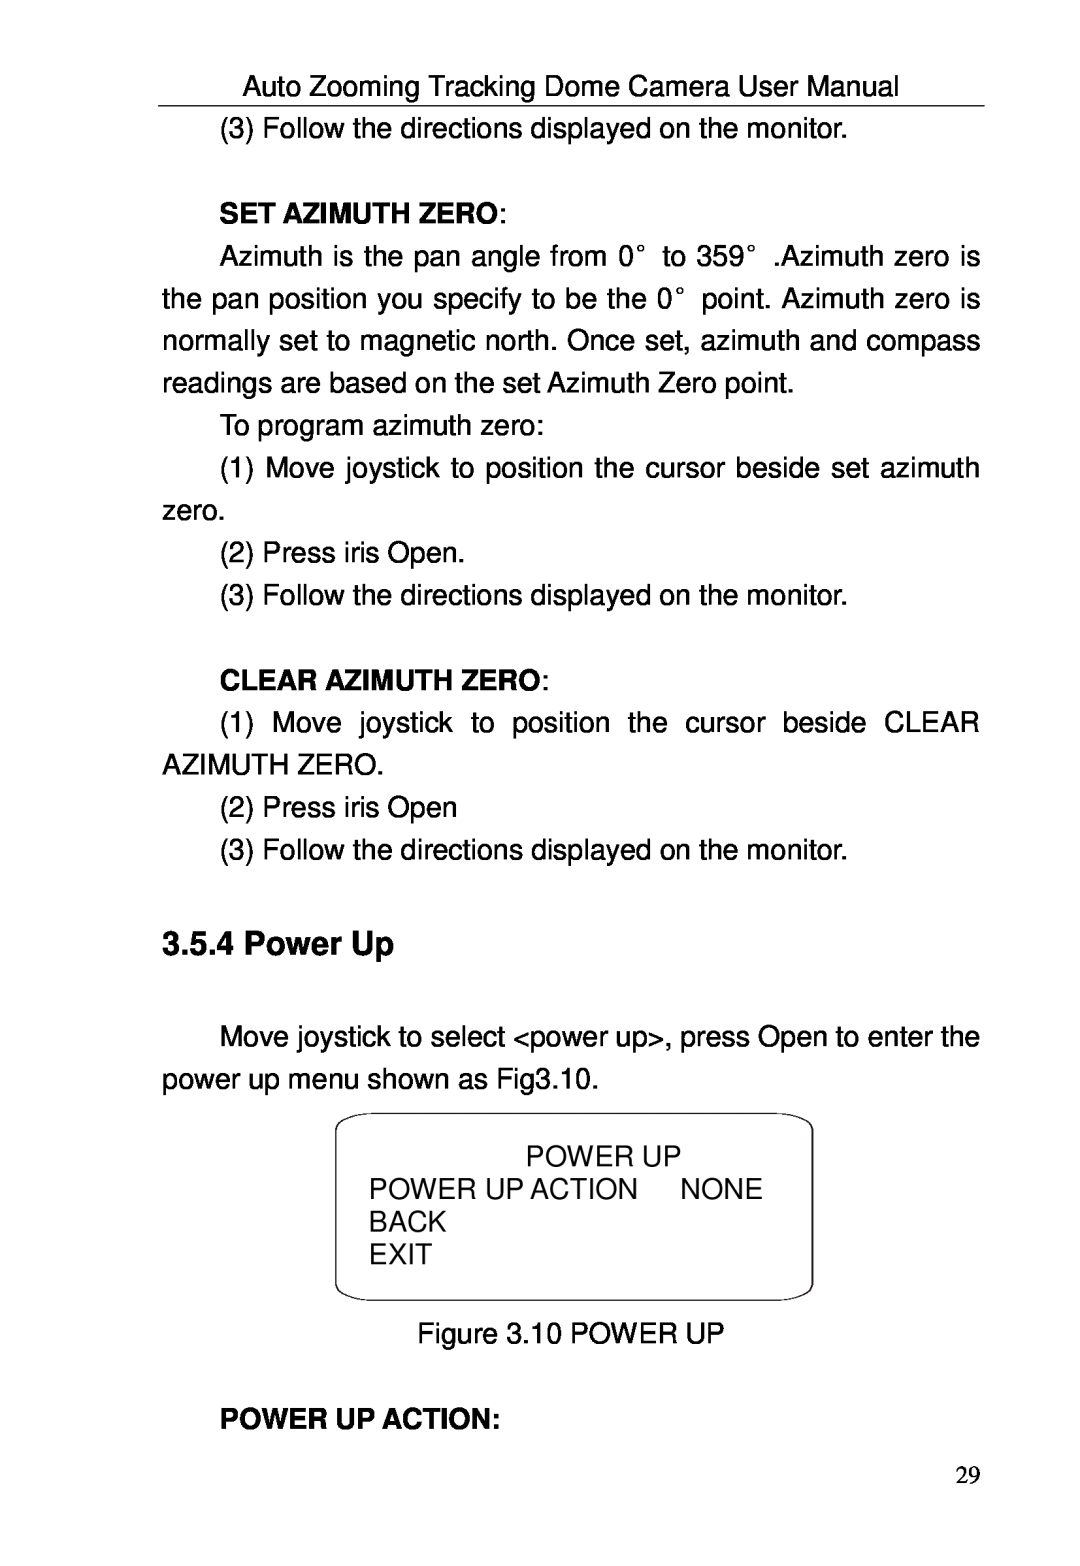 Optiview TRKPTZ-18NX, TRKPTZ -26NX user manual Set Azimuth Zero, Clear Azimuth Zero, Power Up Action 